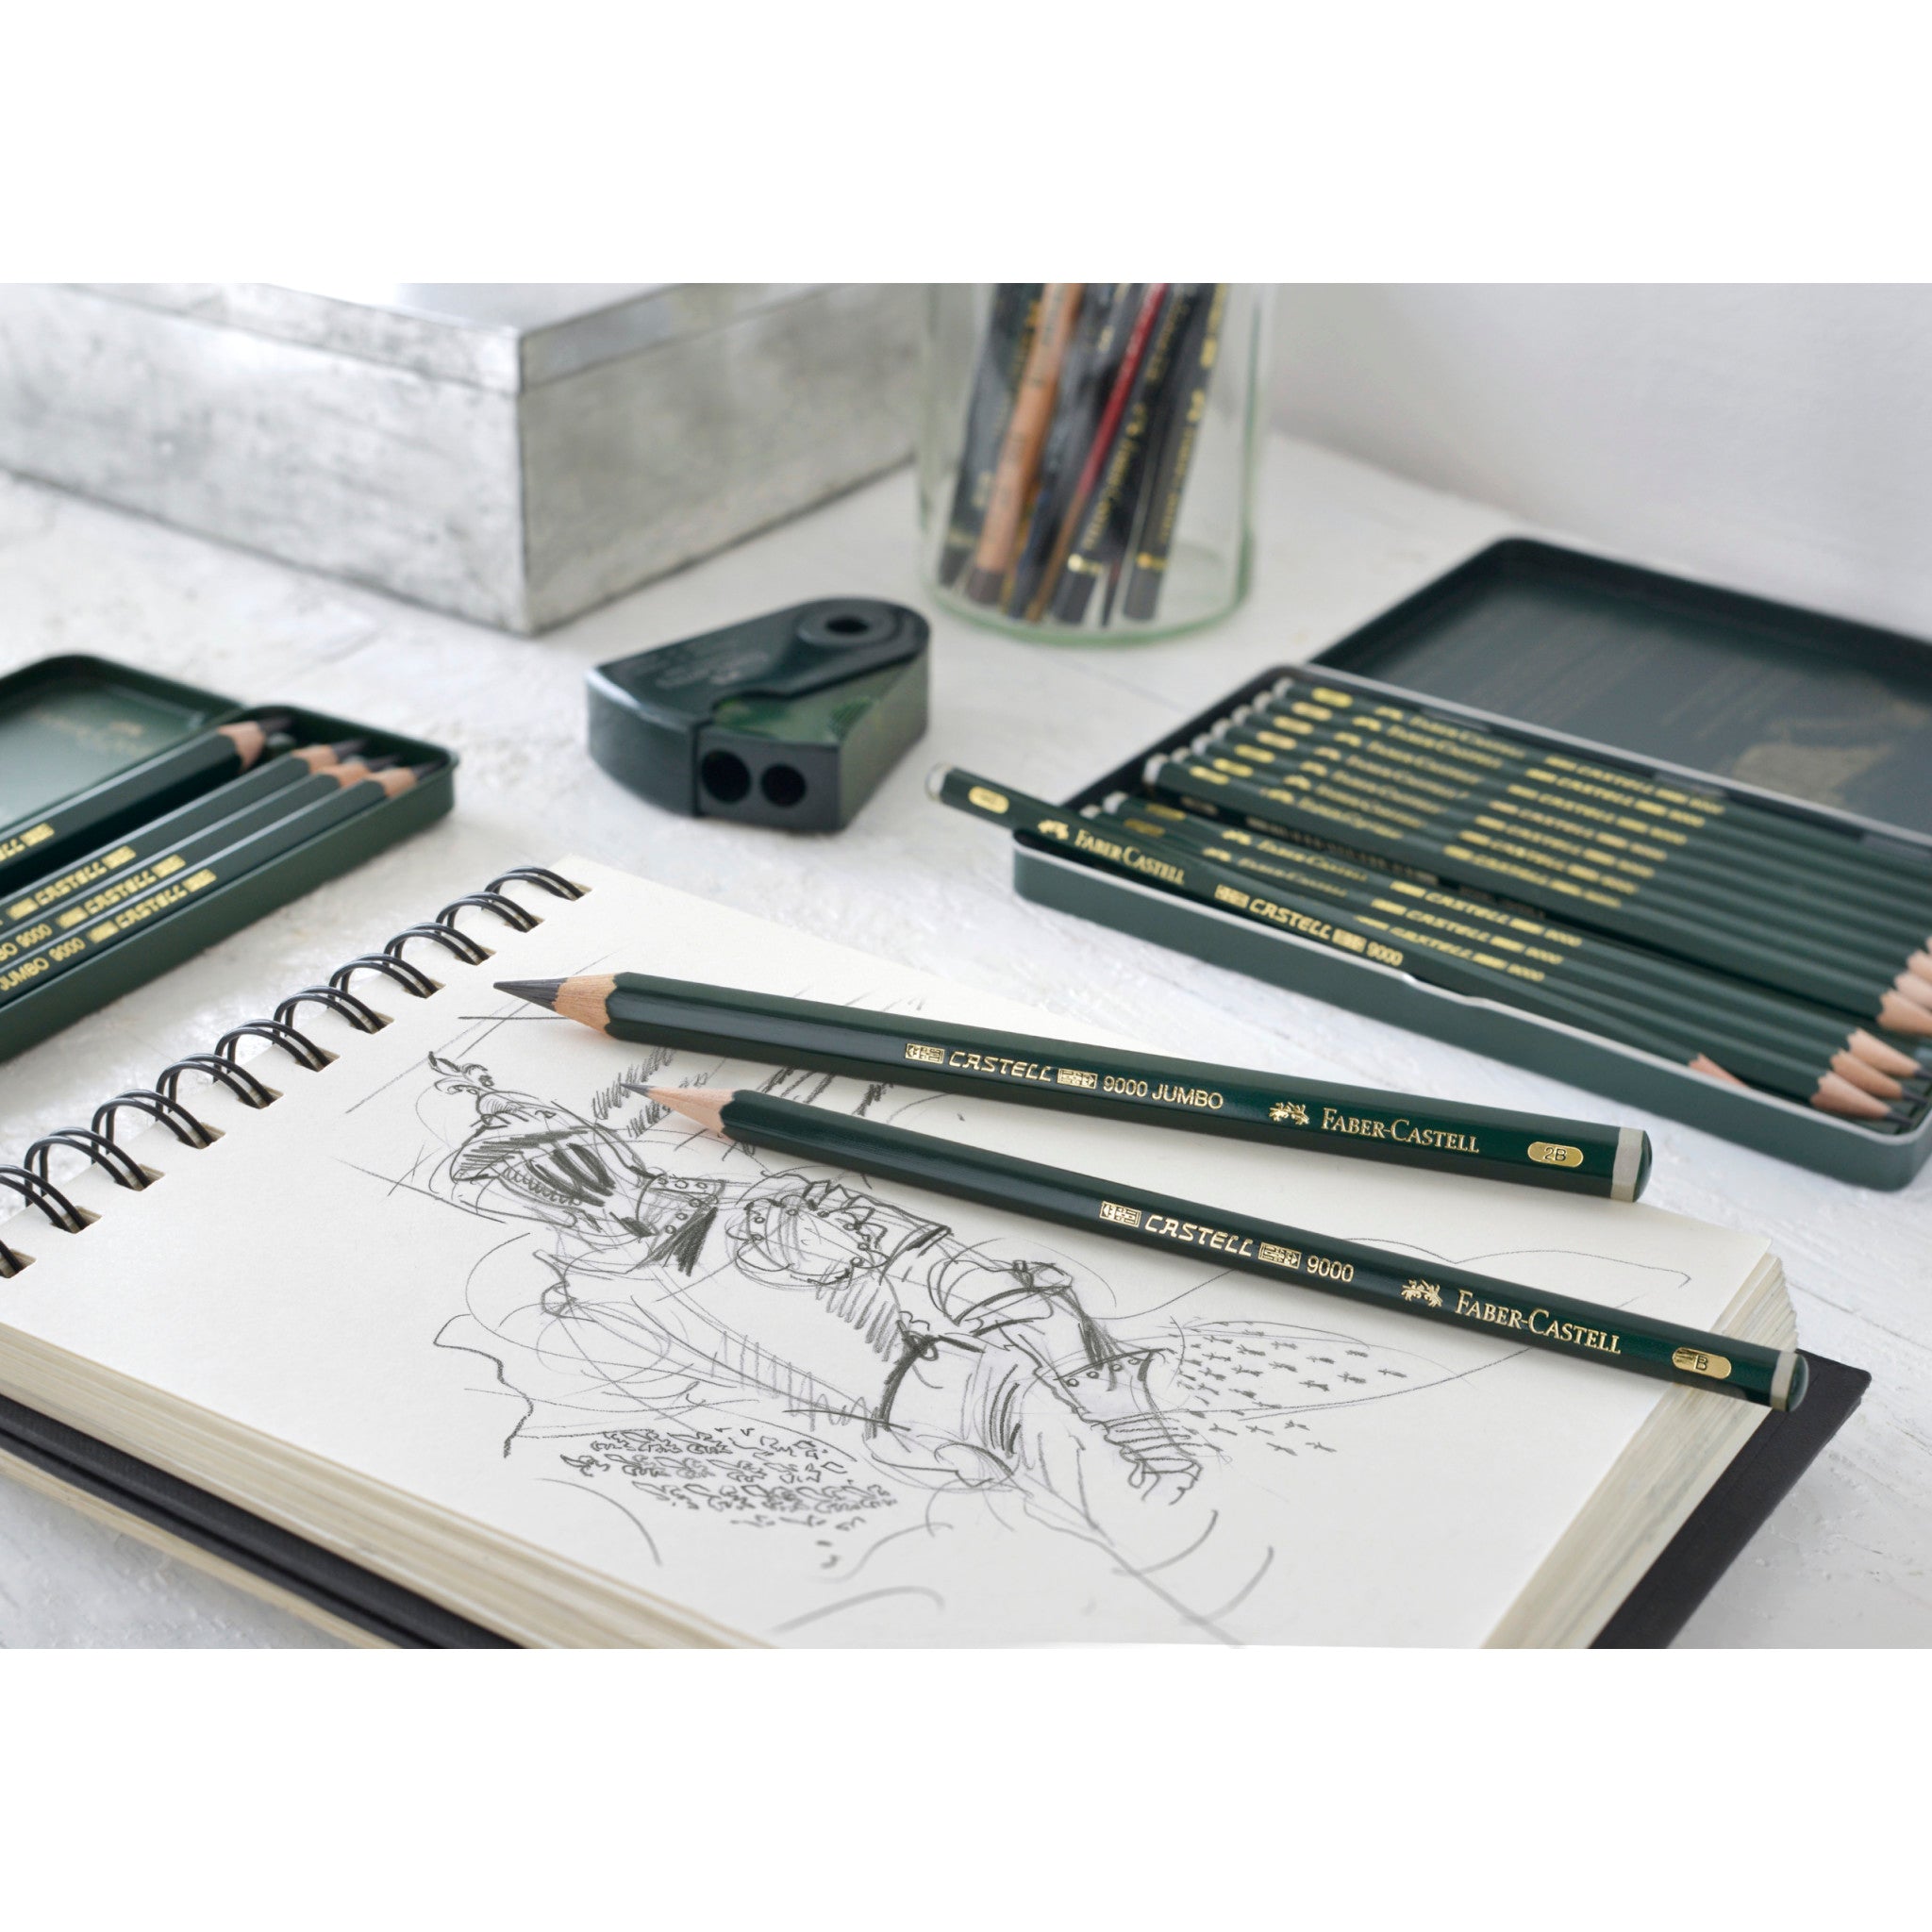 Faber Castell 9000 Graphite Pencil Art Set of 12